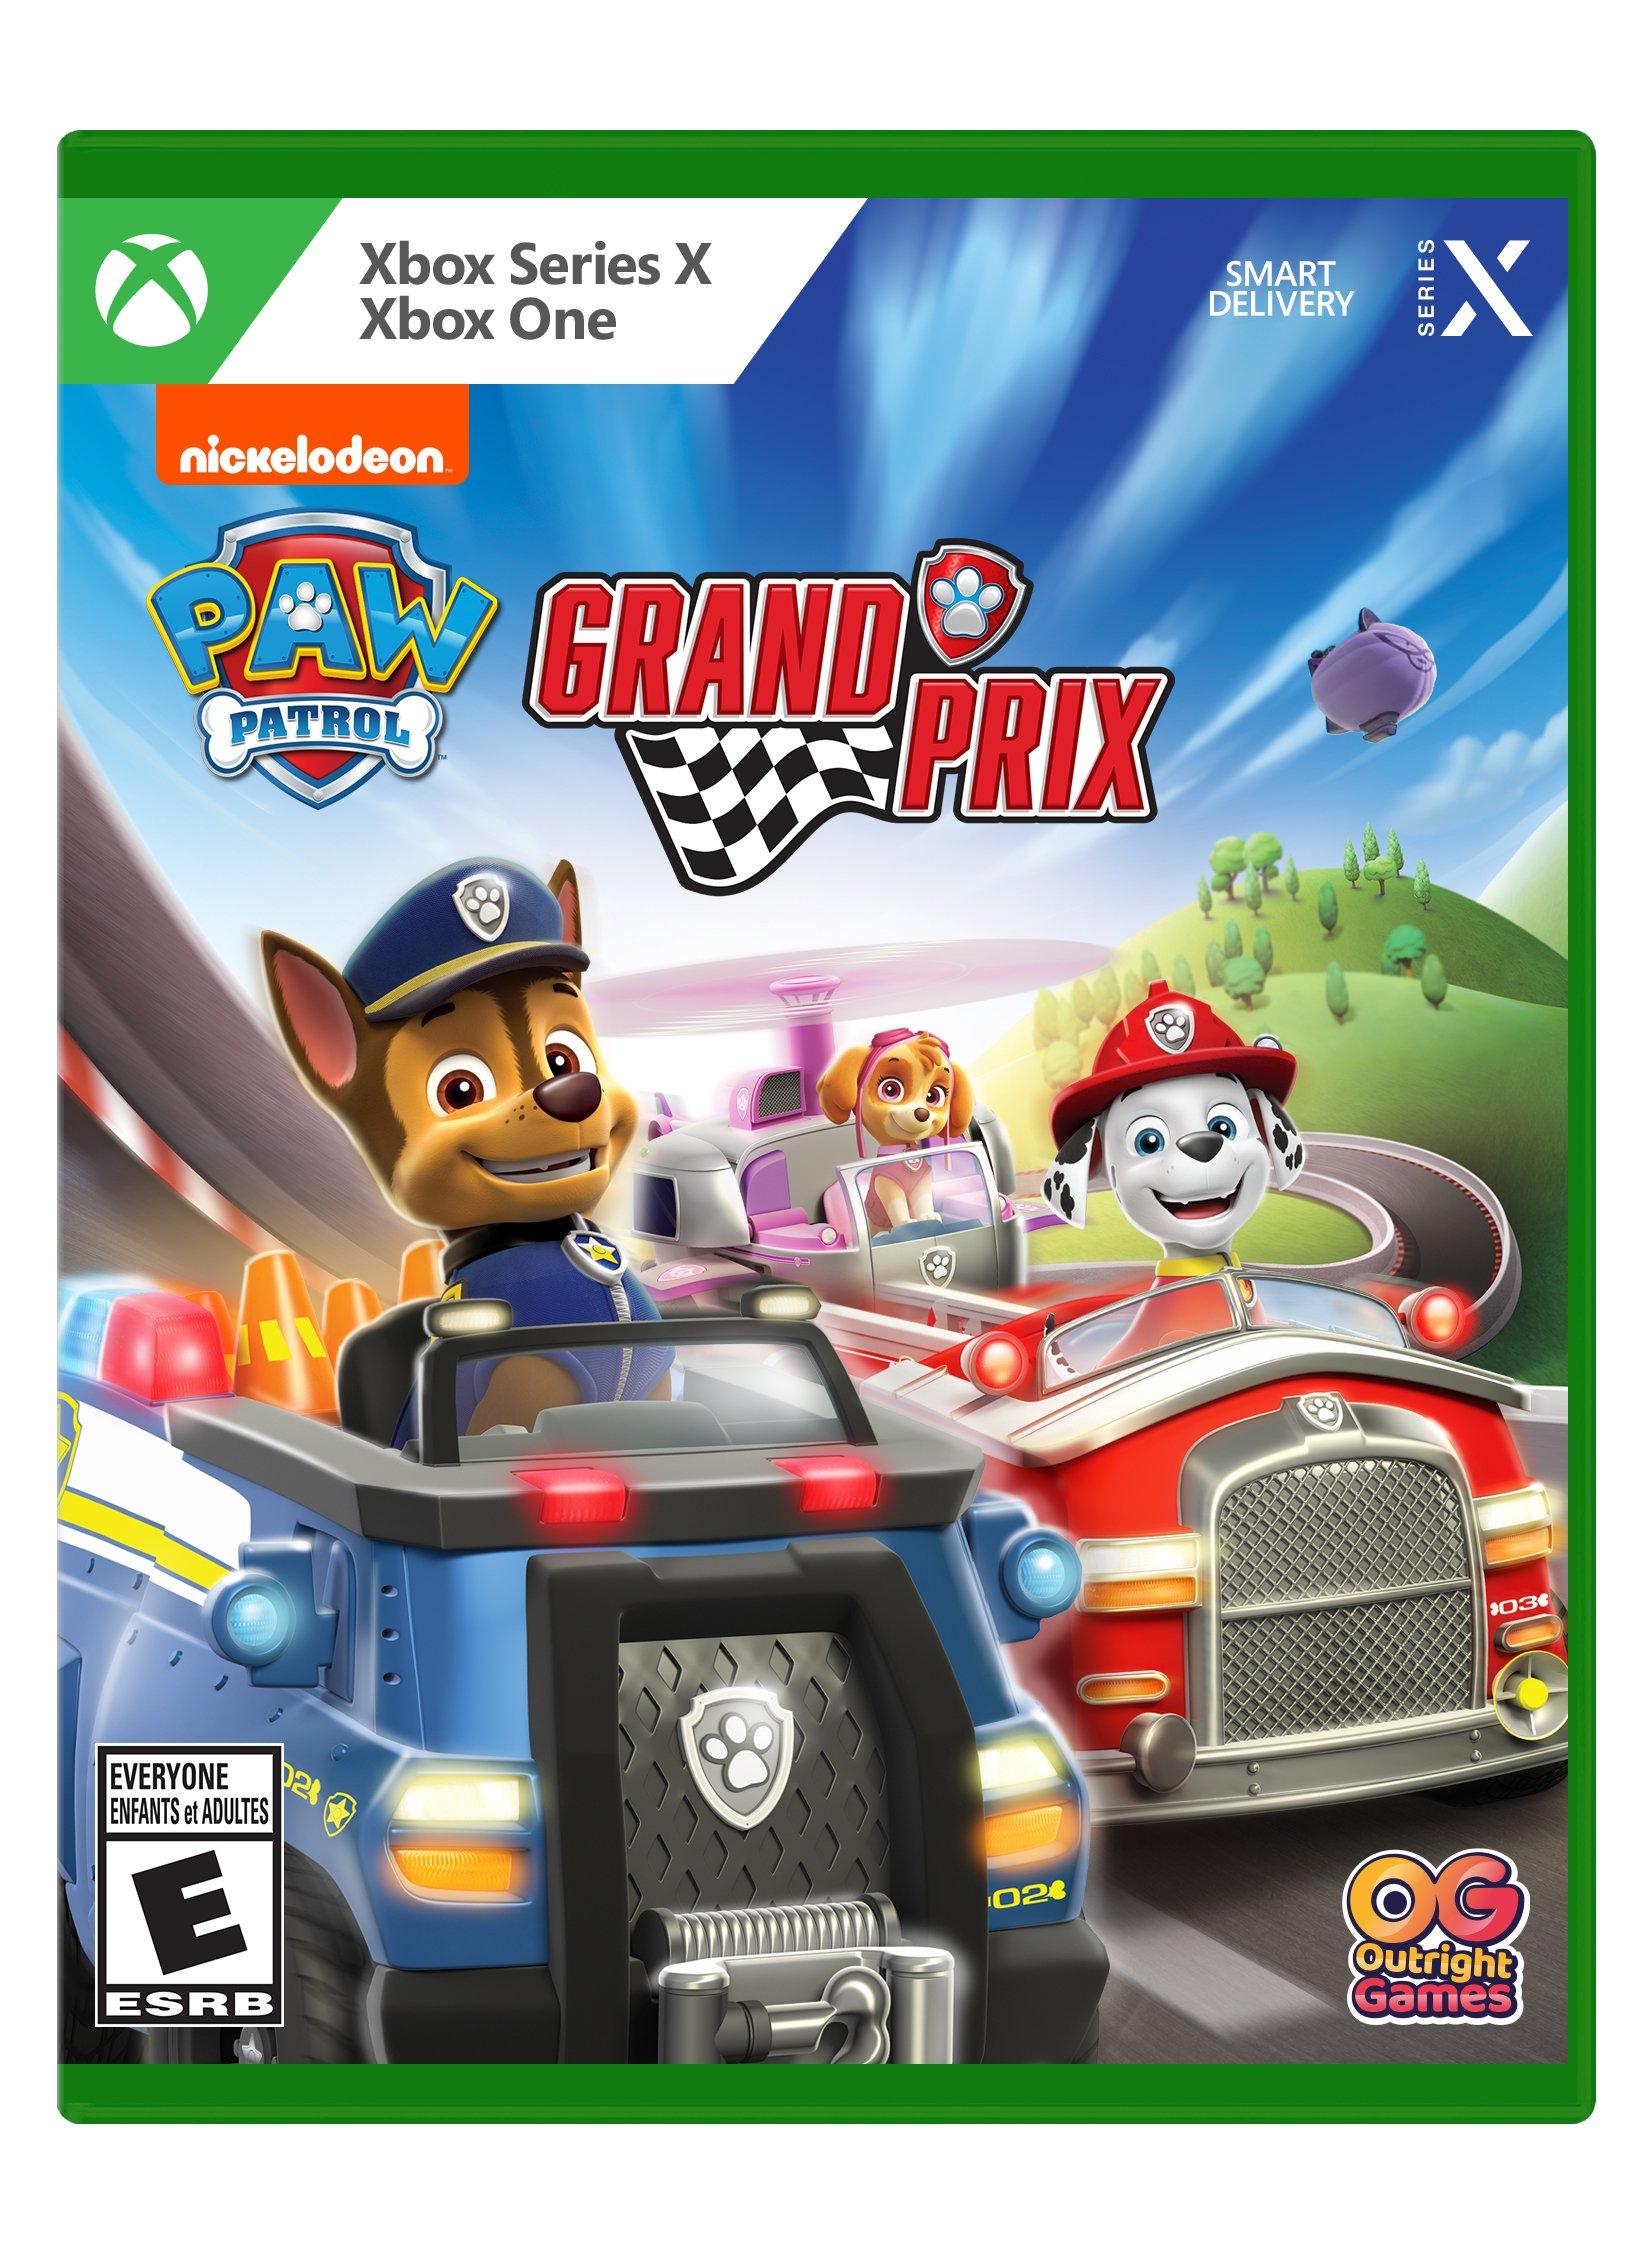 Prix | One Paw X, Patrol Series X | Xbox - Grand Xbox GameStop Xbox Series